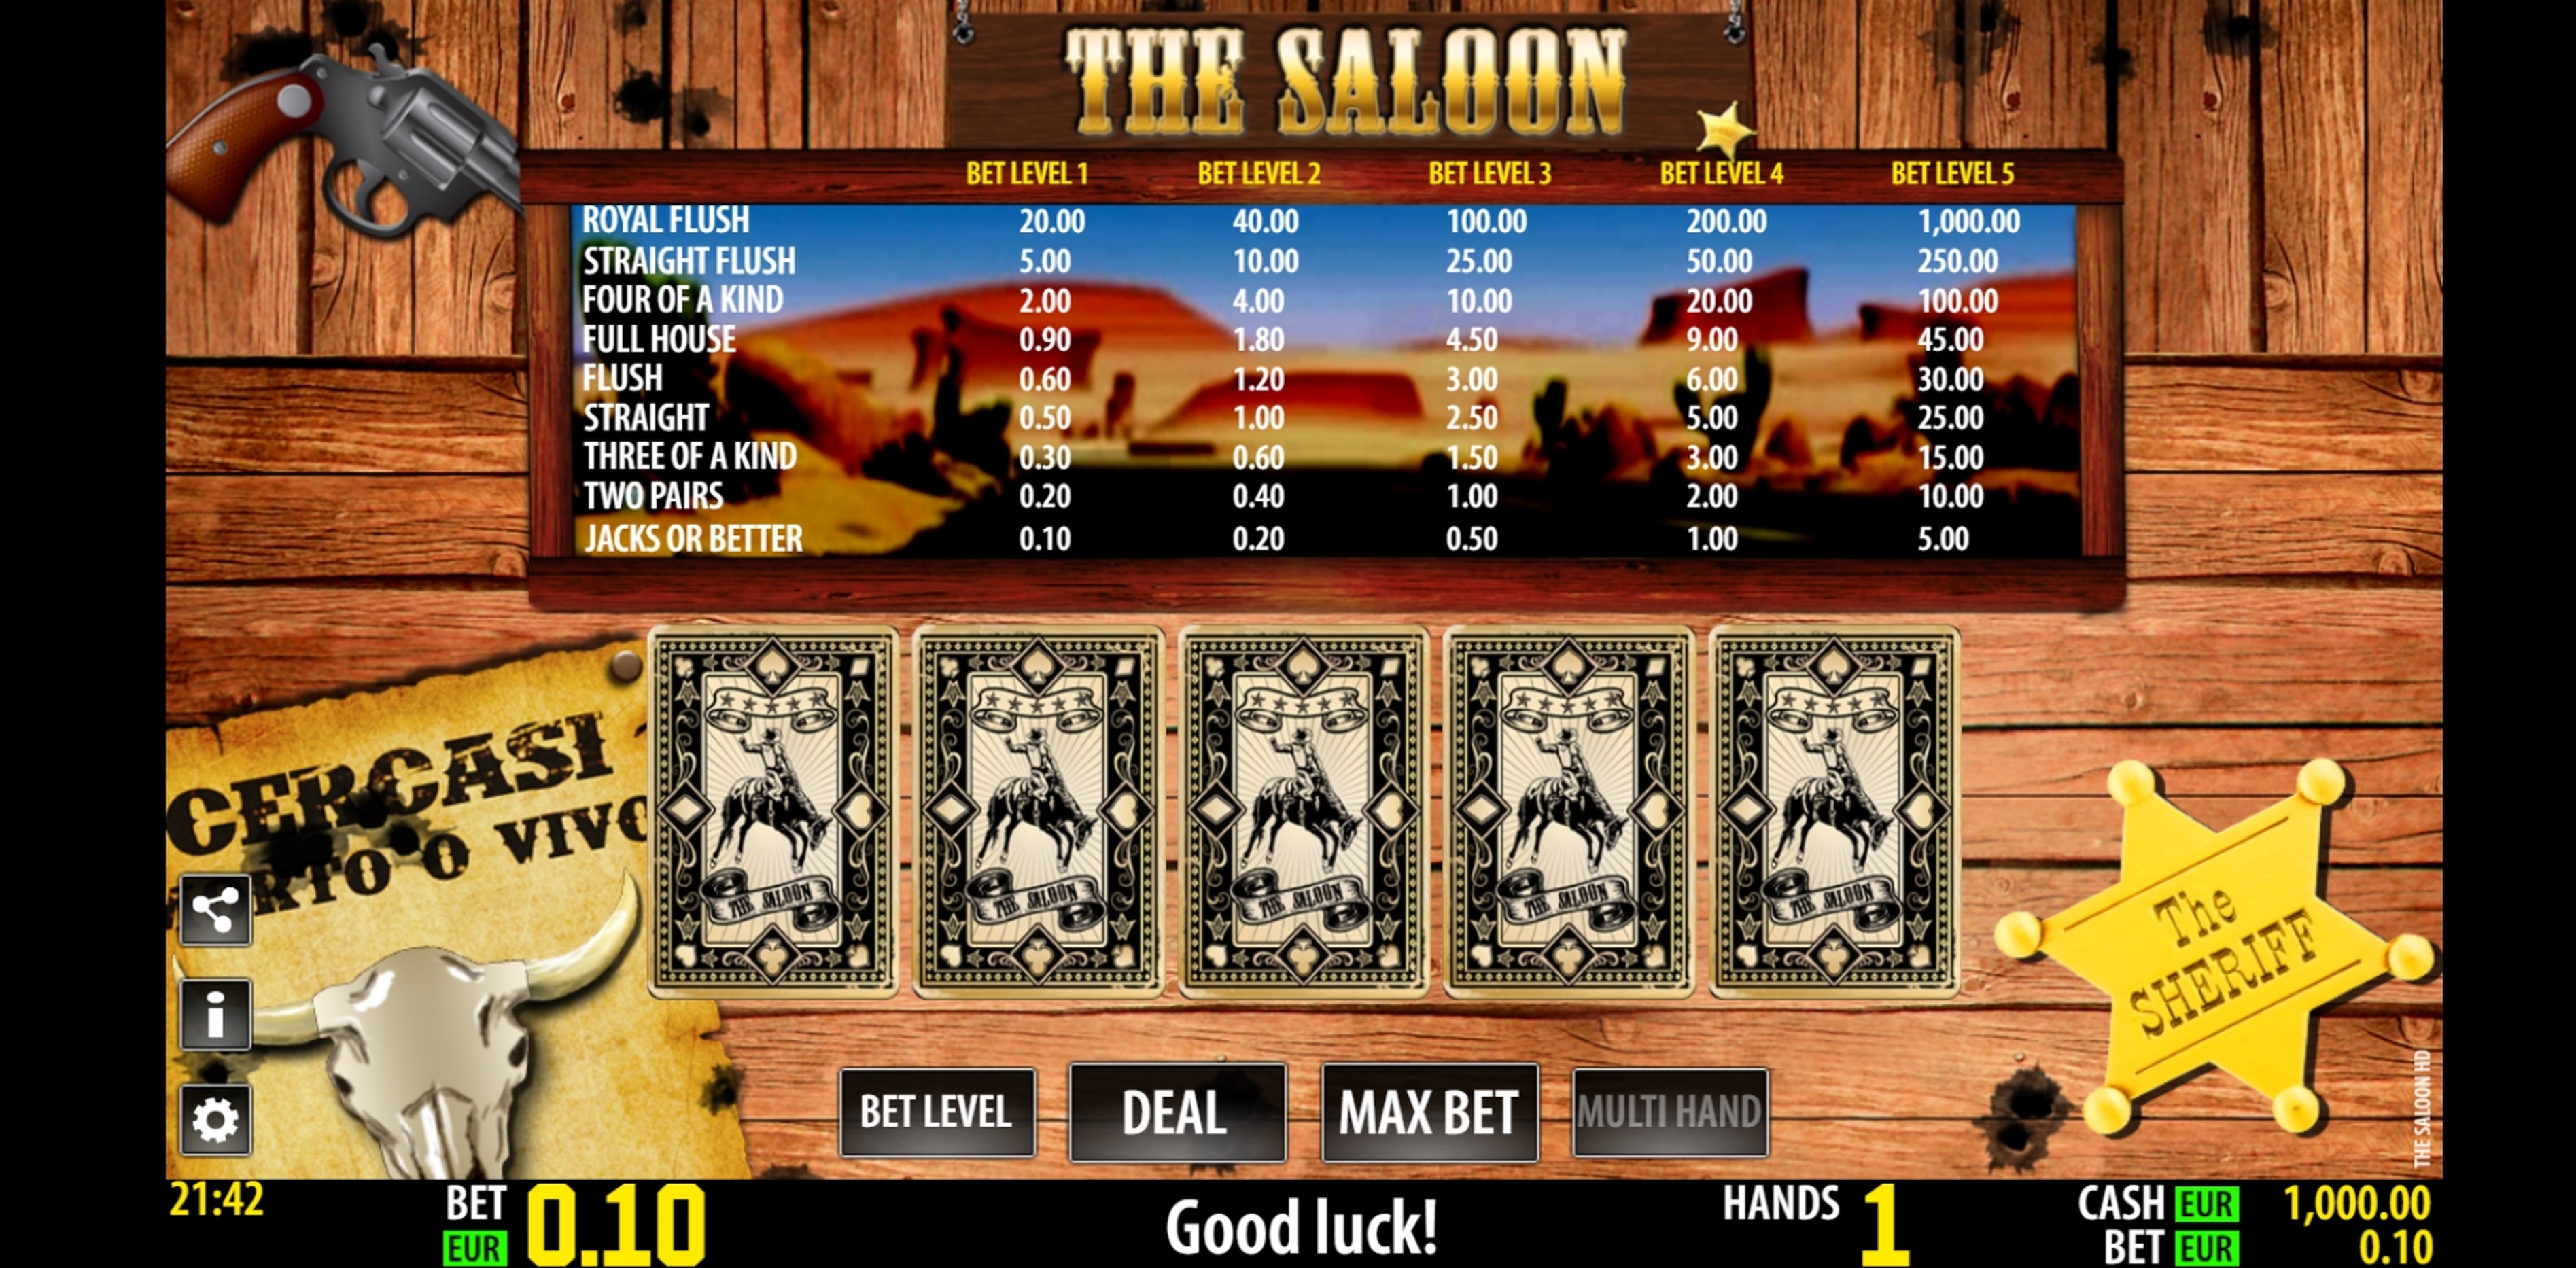 The Saloon HD demo